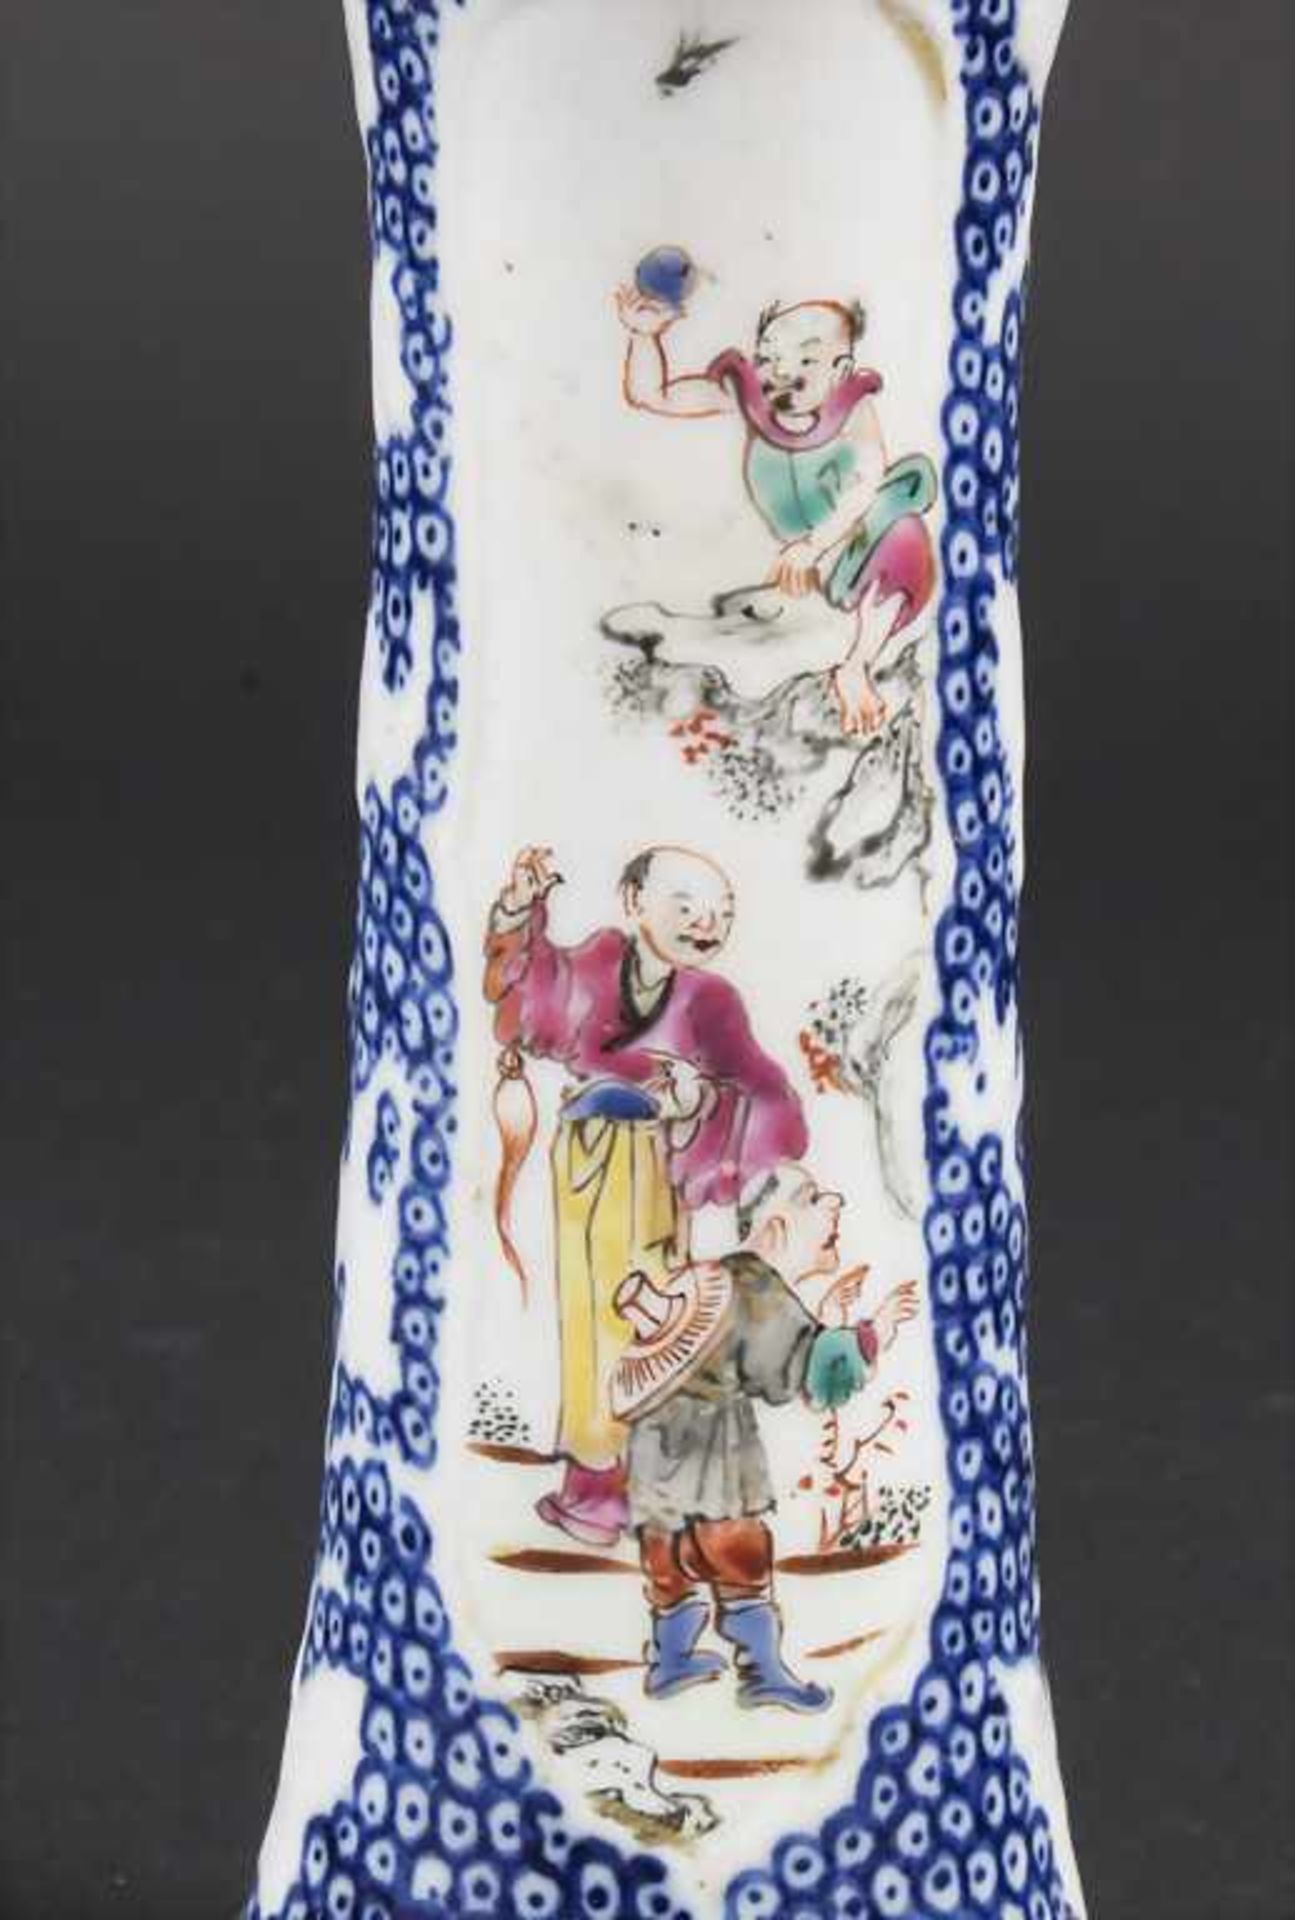 Ziervase / A decorative porcelain vase, China, Qing Dynastie (1644-1911), 18. Jh. - Image 7 of 9